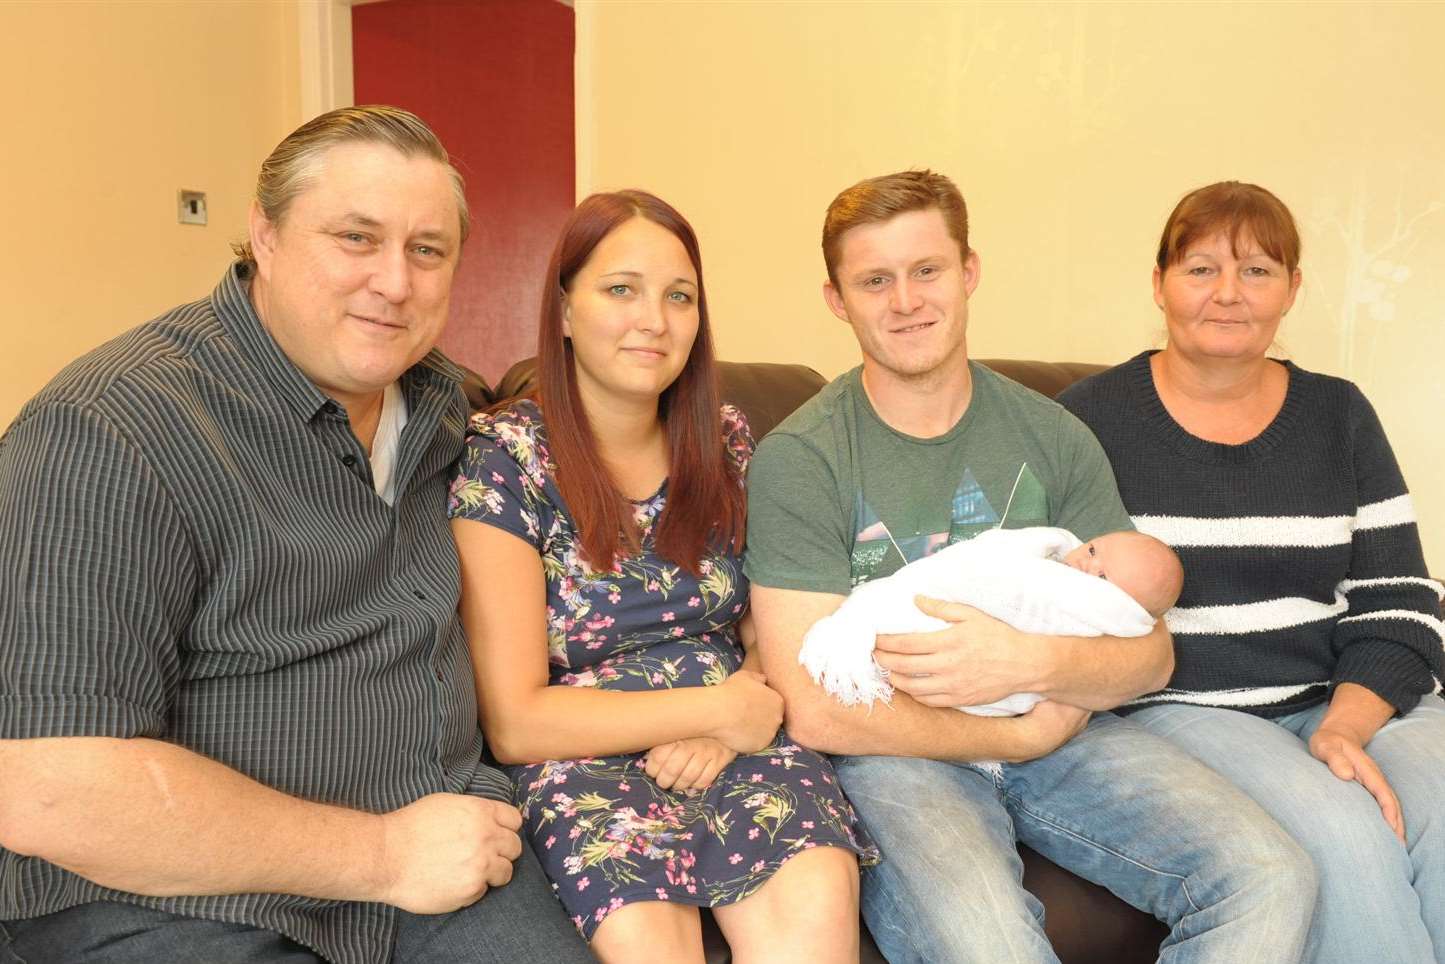 Matt Holkham and Jasmine Sellen with baby Harrison Daniel Holkham (centre), with grandparents Rodney and Tracy Holkham. Picture: Steve Crispe